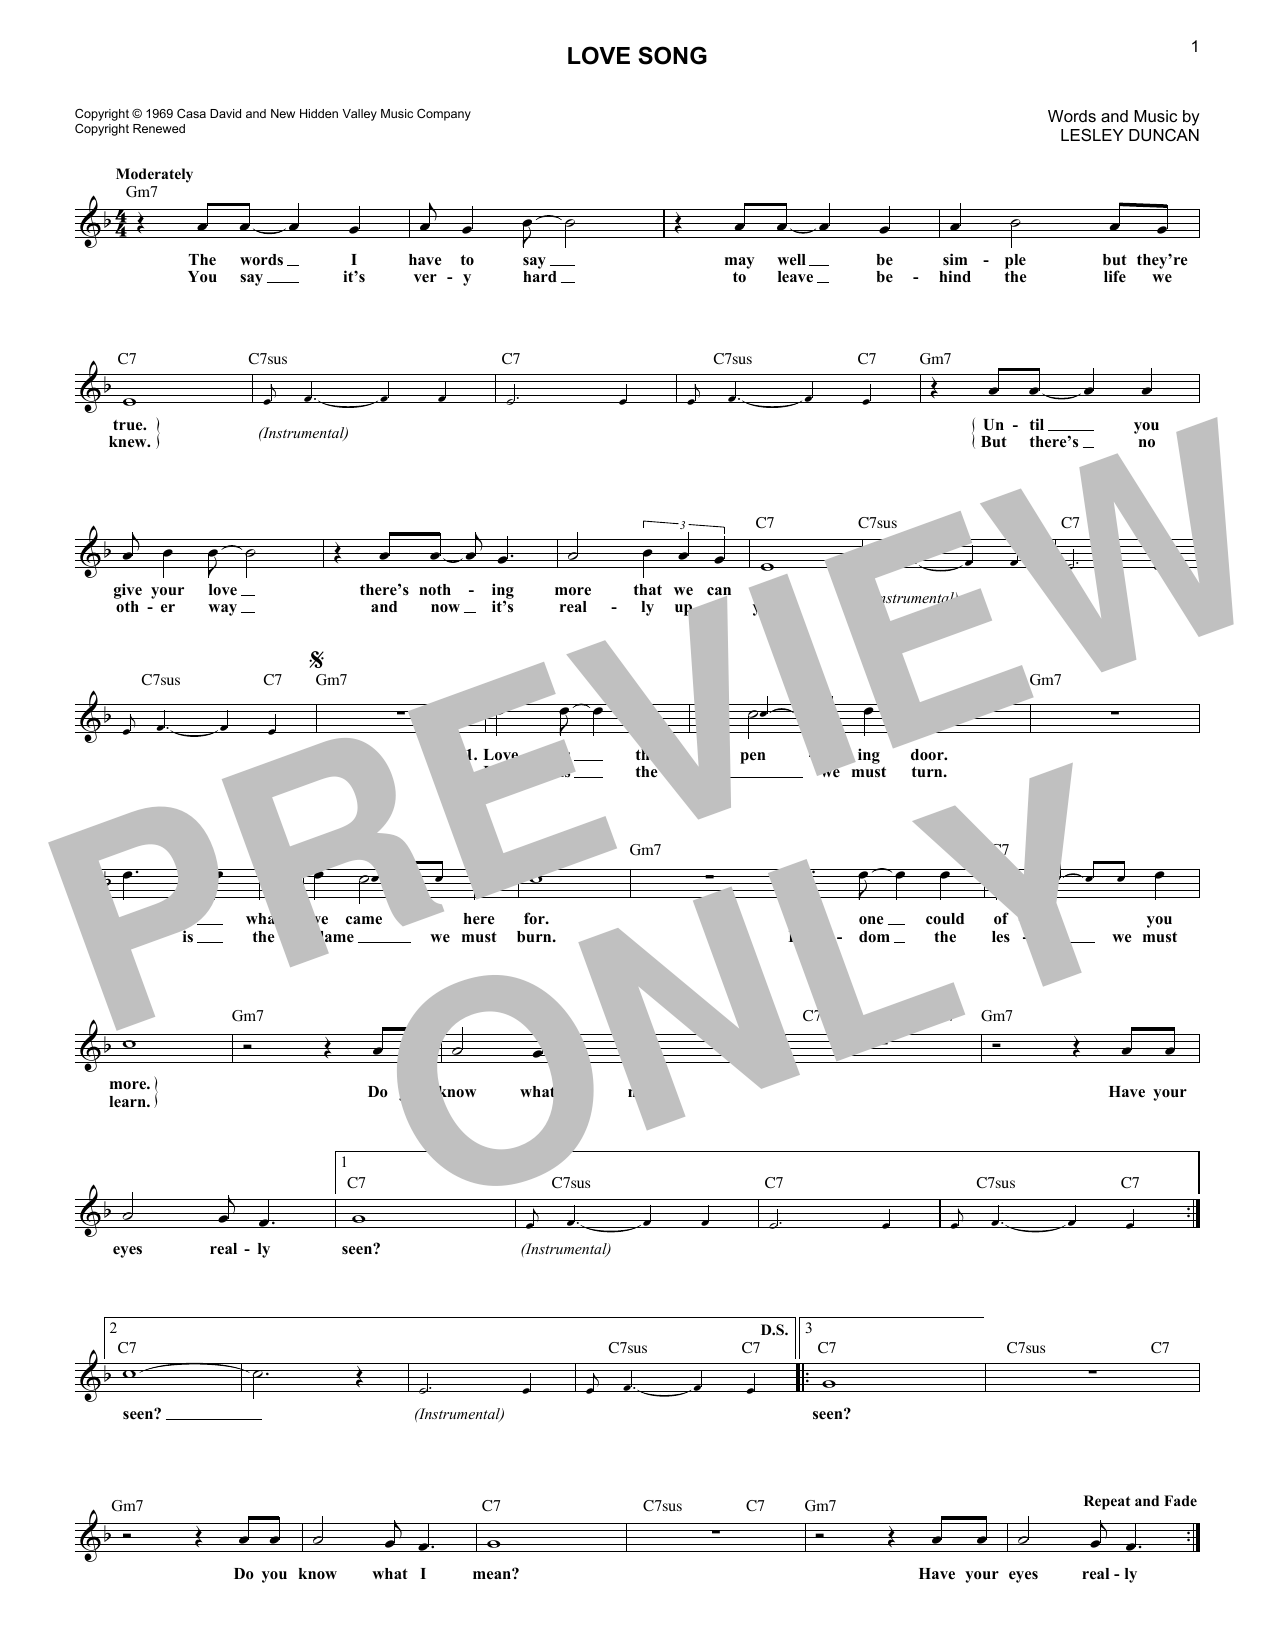 Elton John Love Song Sheet Music Notes & Chords for Lead Sheet / Fake Book - Download or Print PDF